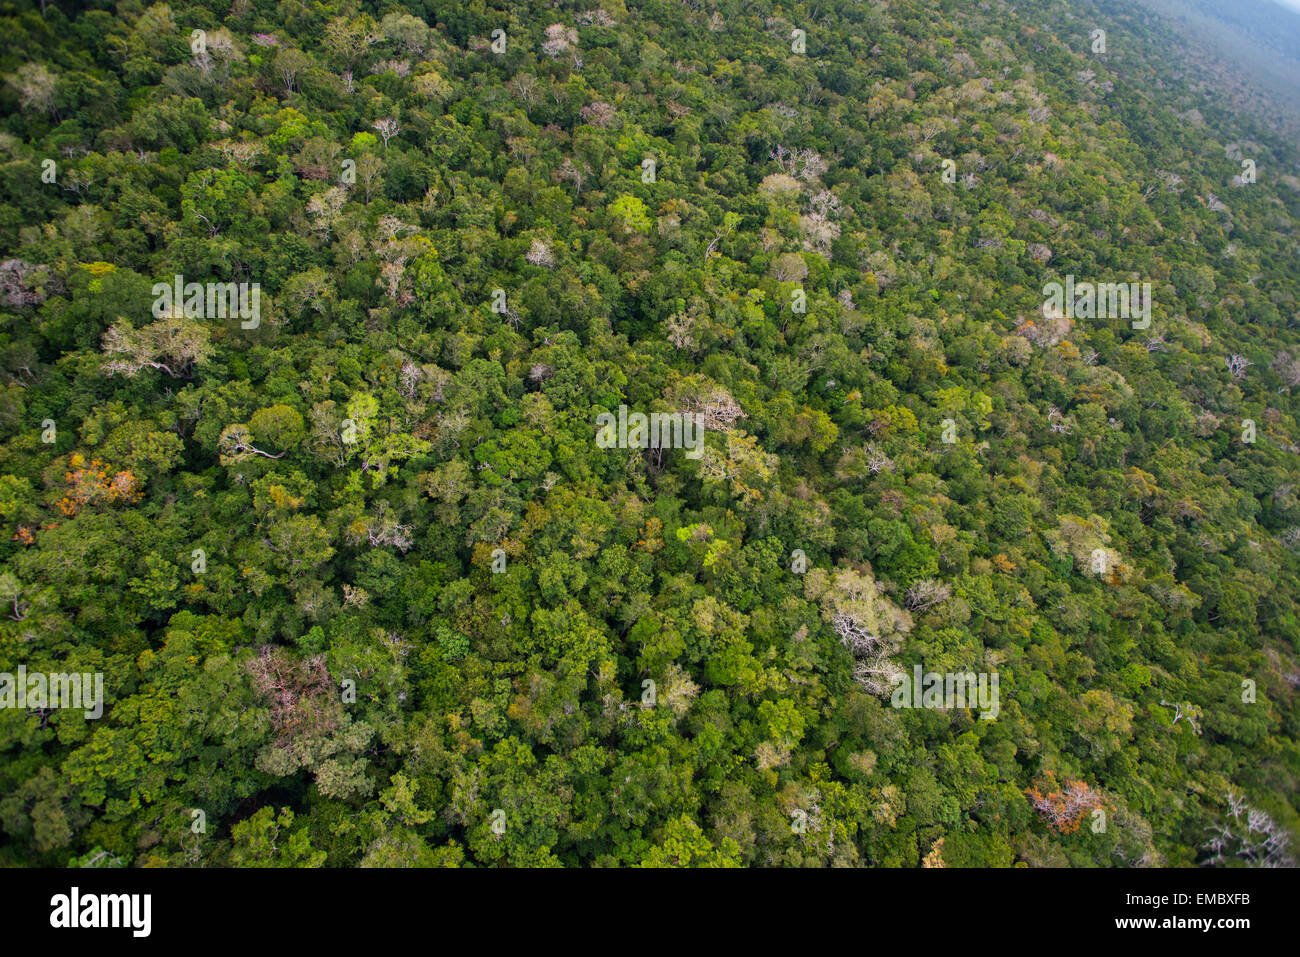 Aerial view of Guatemala's Maya Biosphere Reserve Stock Photo